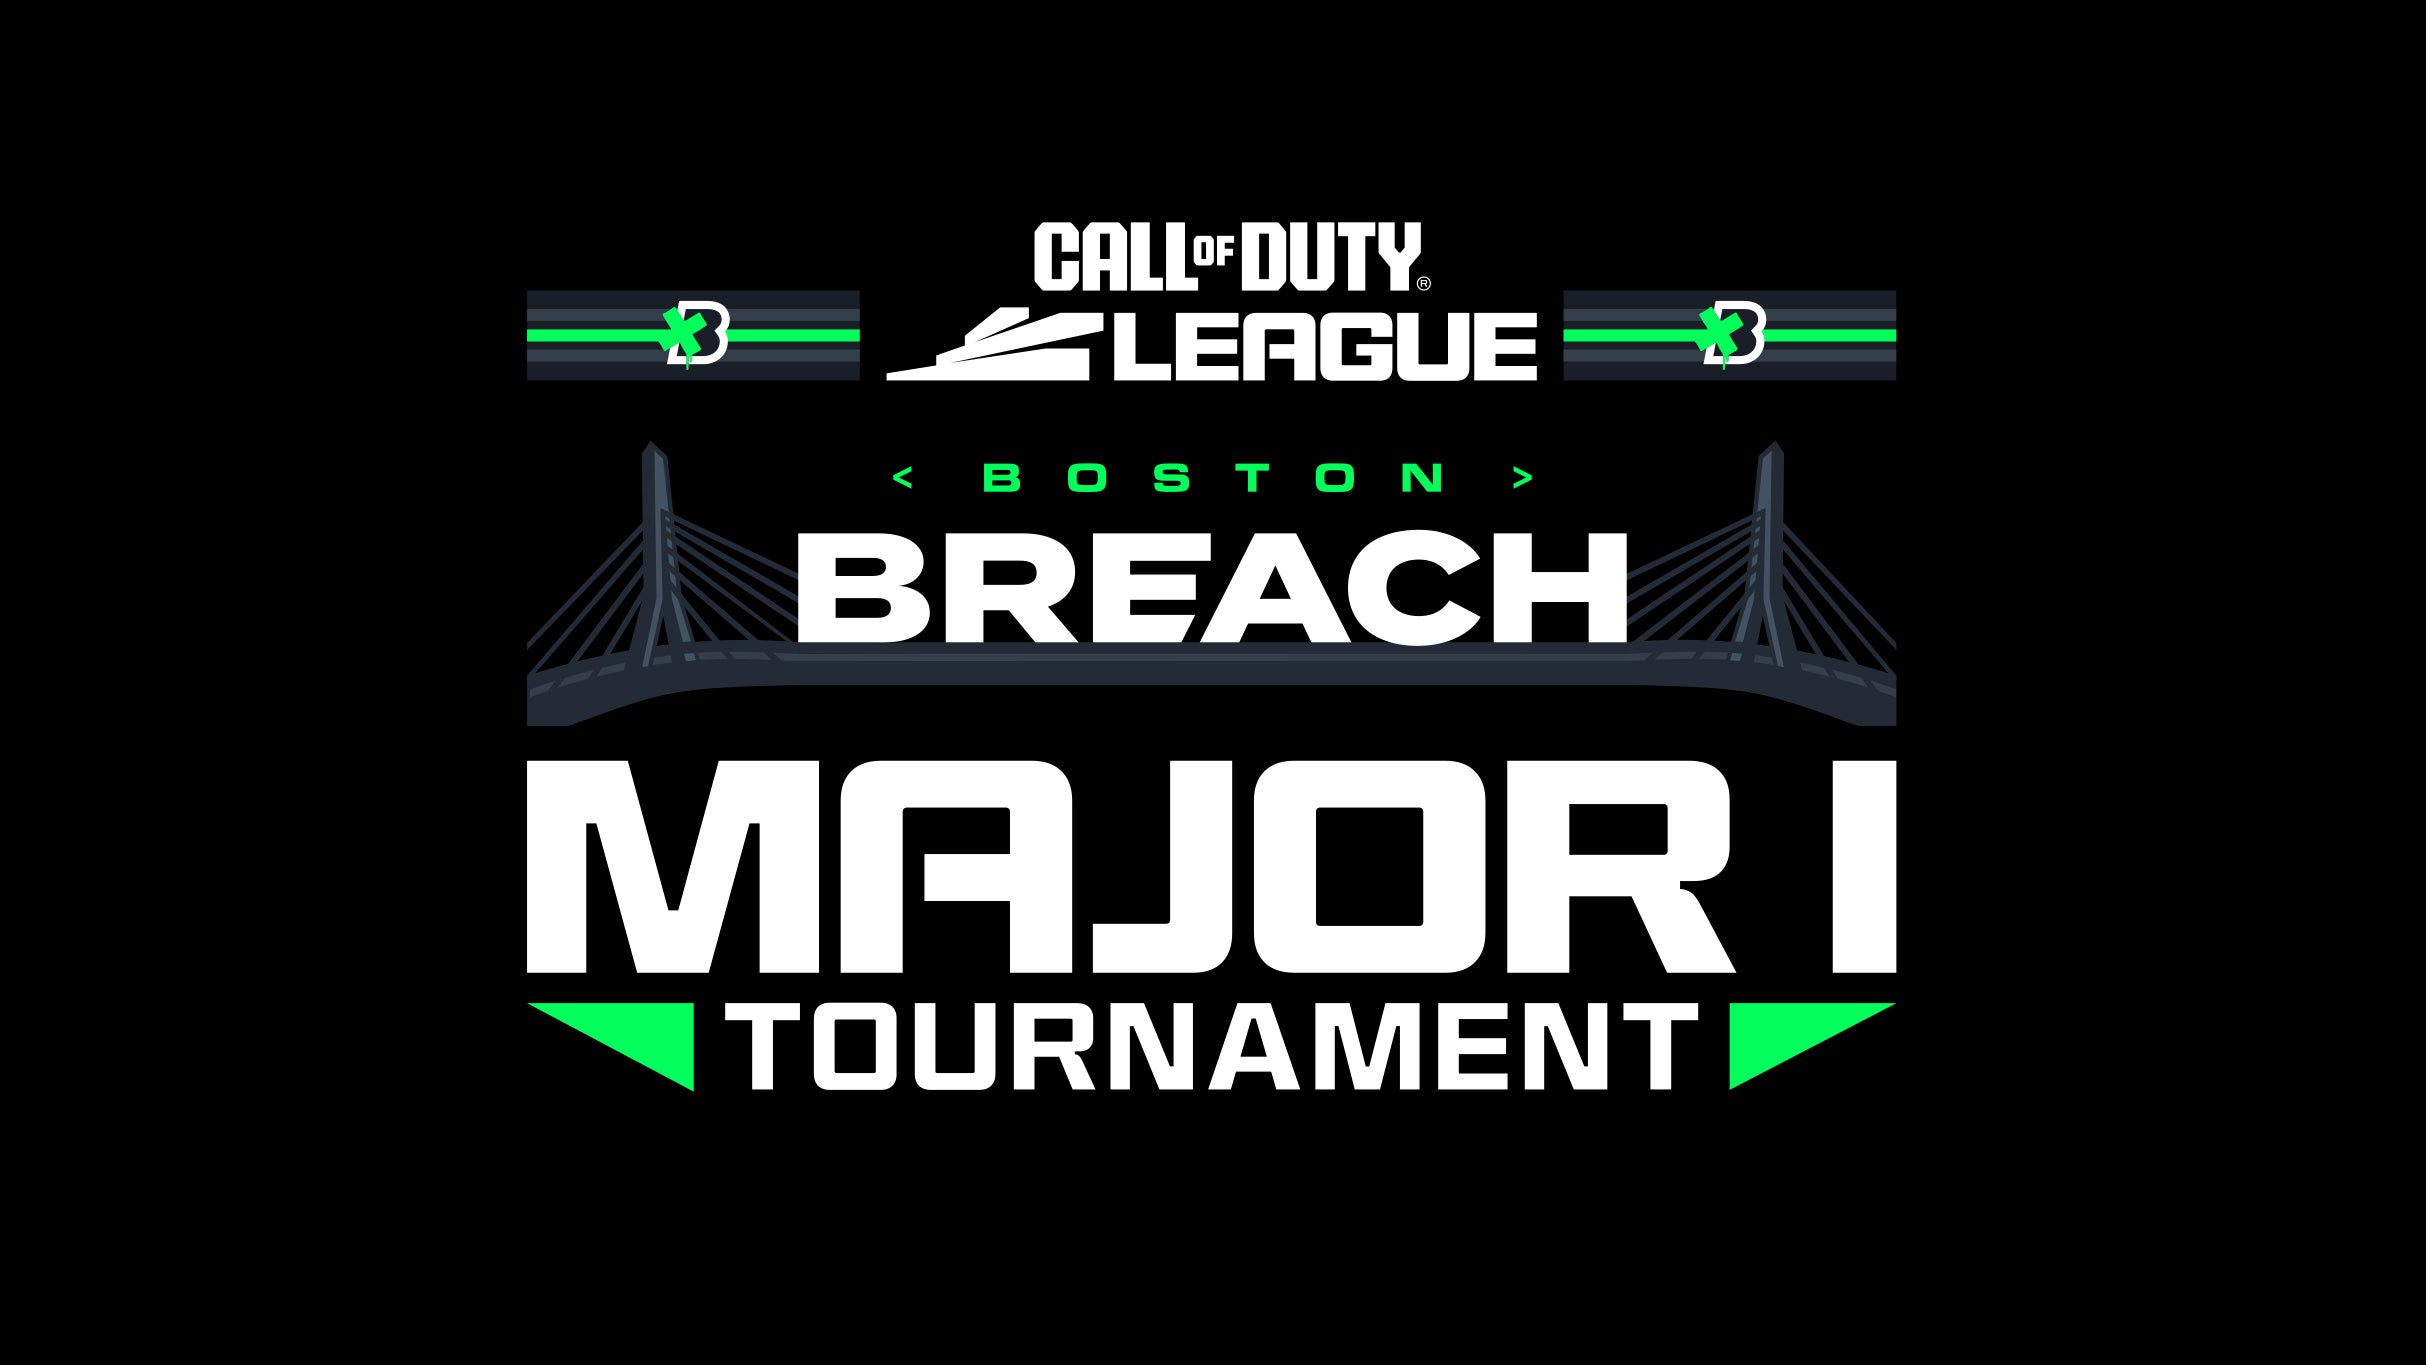 Call Of Duty League Major 1 - Boston Breach 4-Day Pass (17+) in Boston promo photo for 4-DAY Gold VIP presale offer code